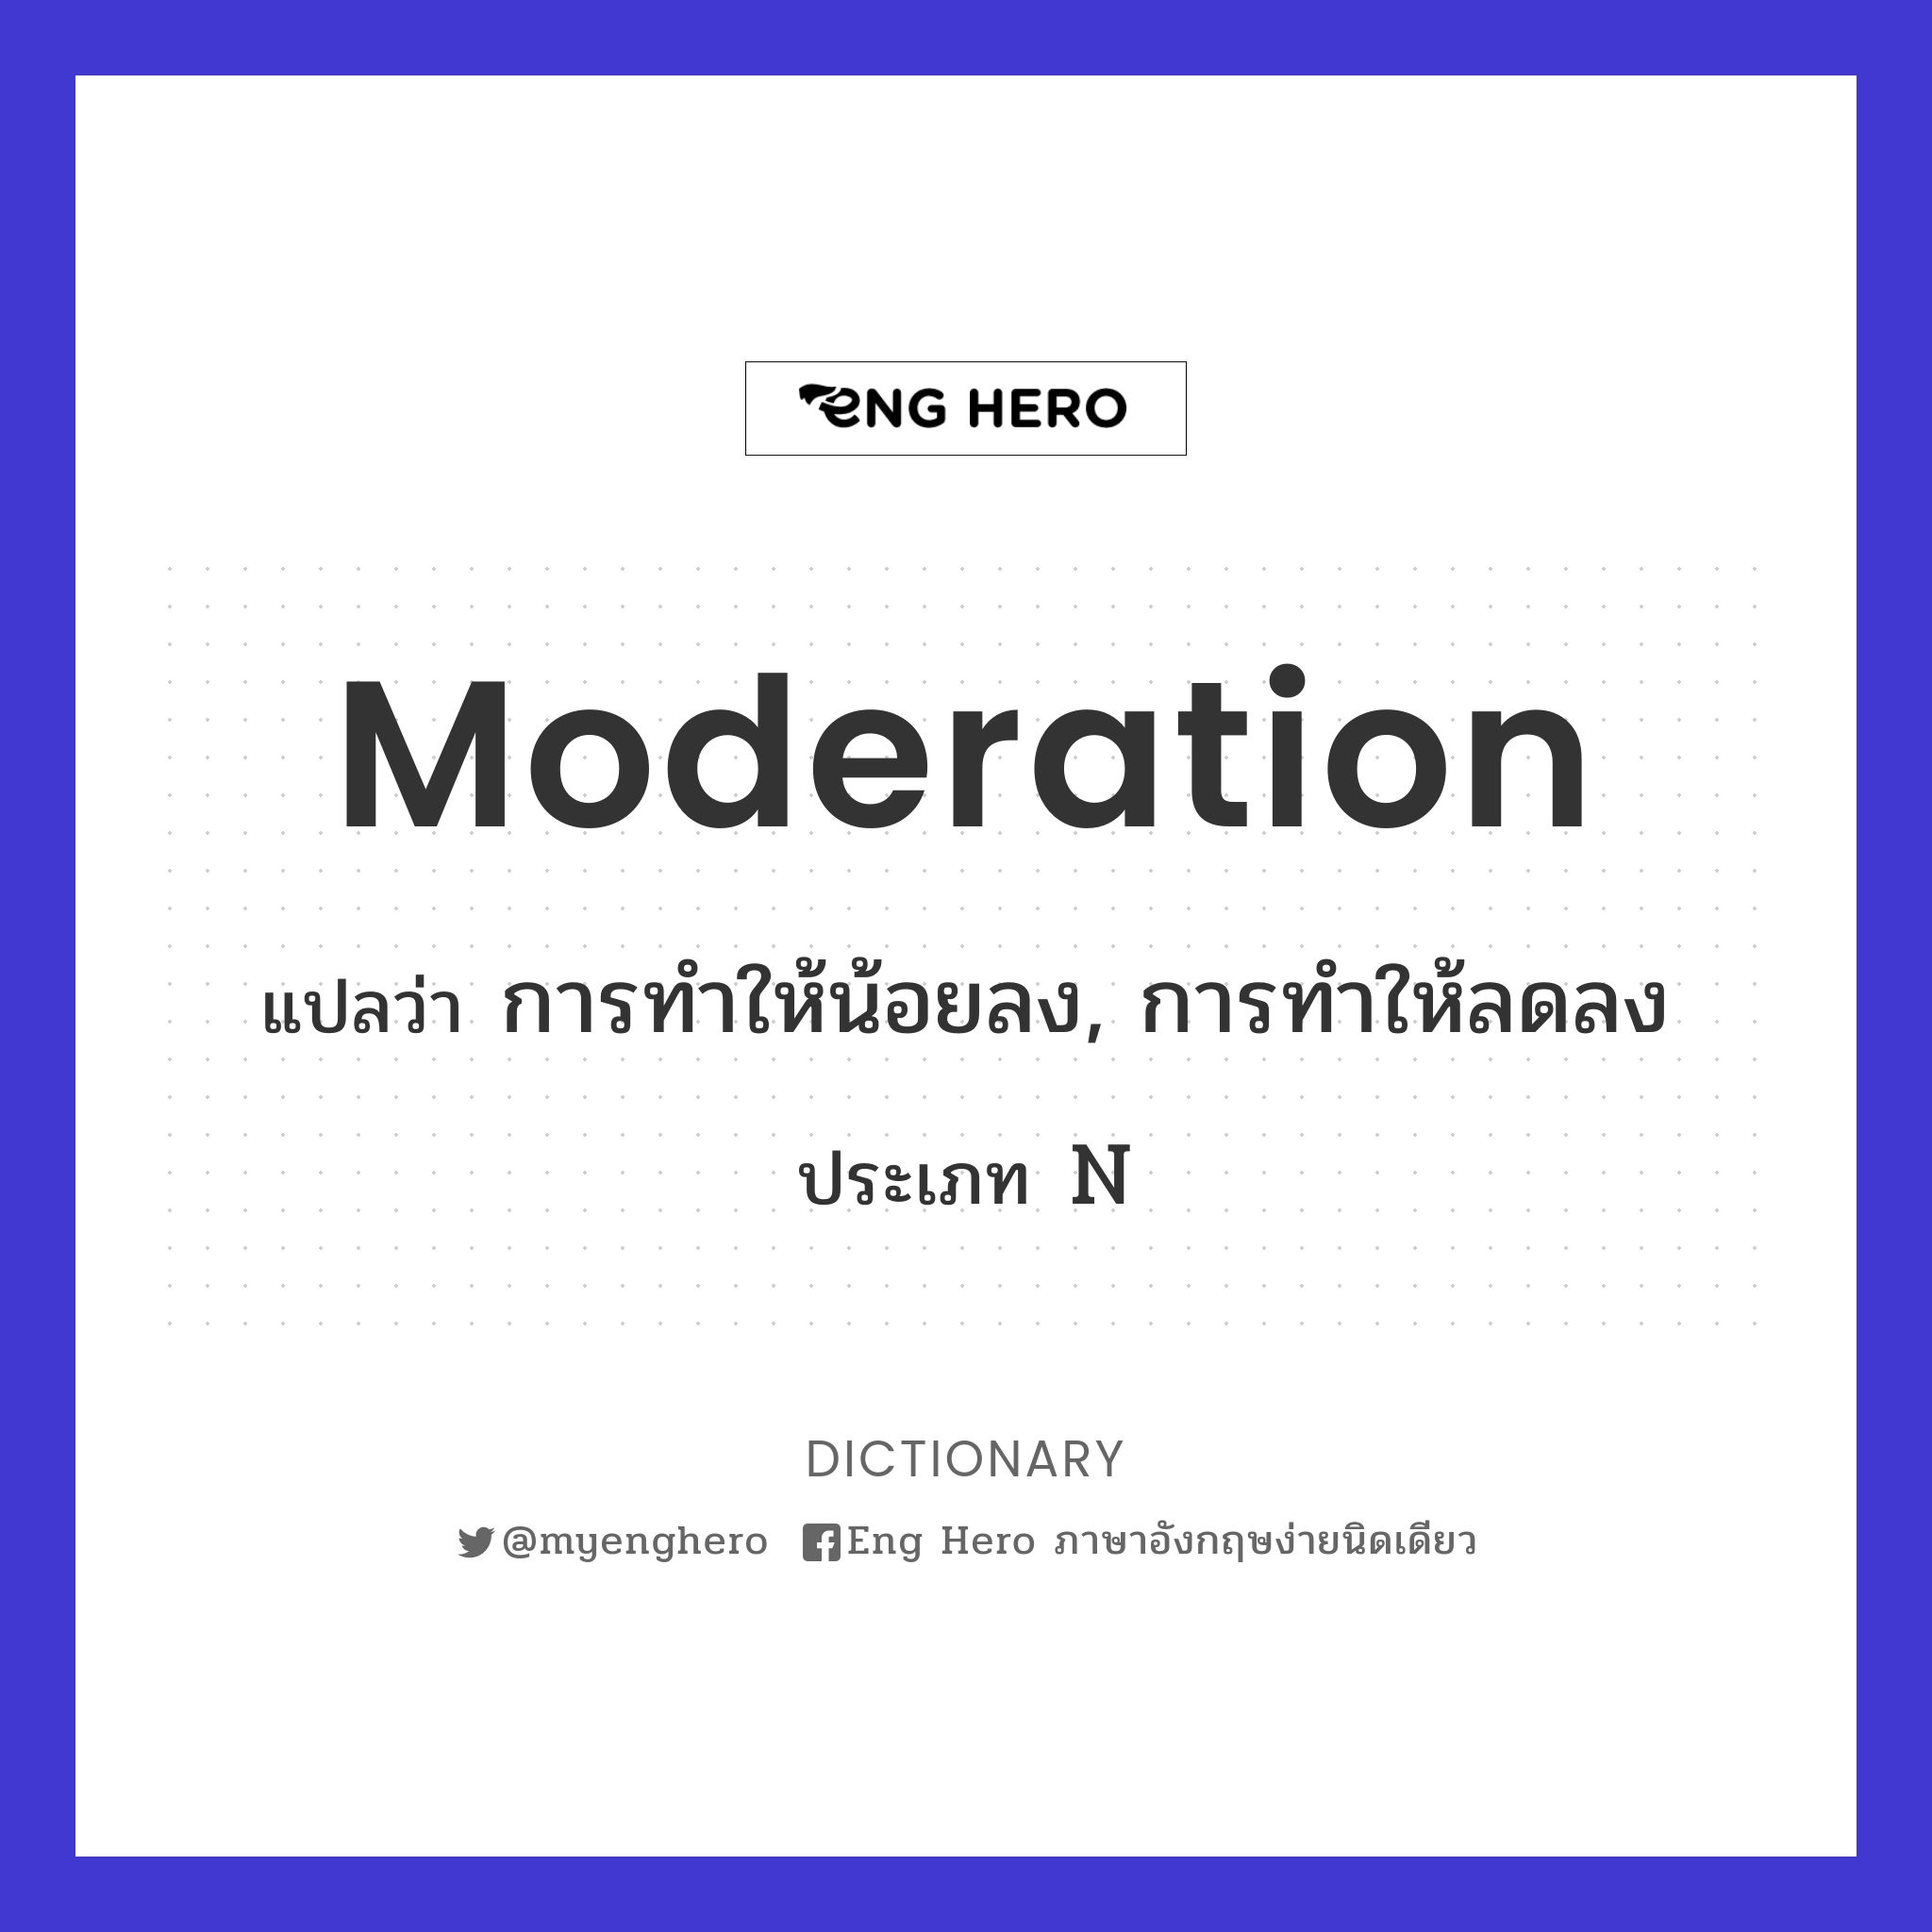 moderation